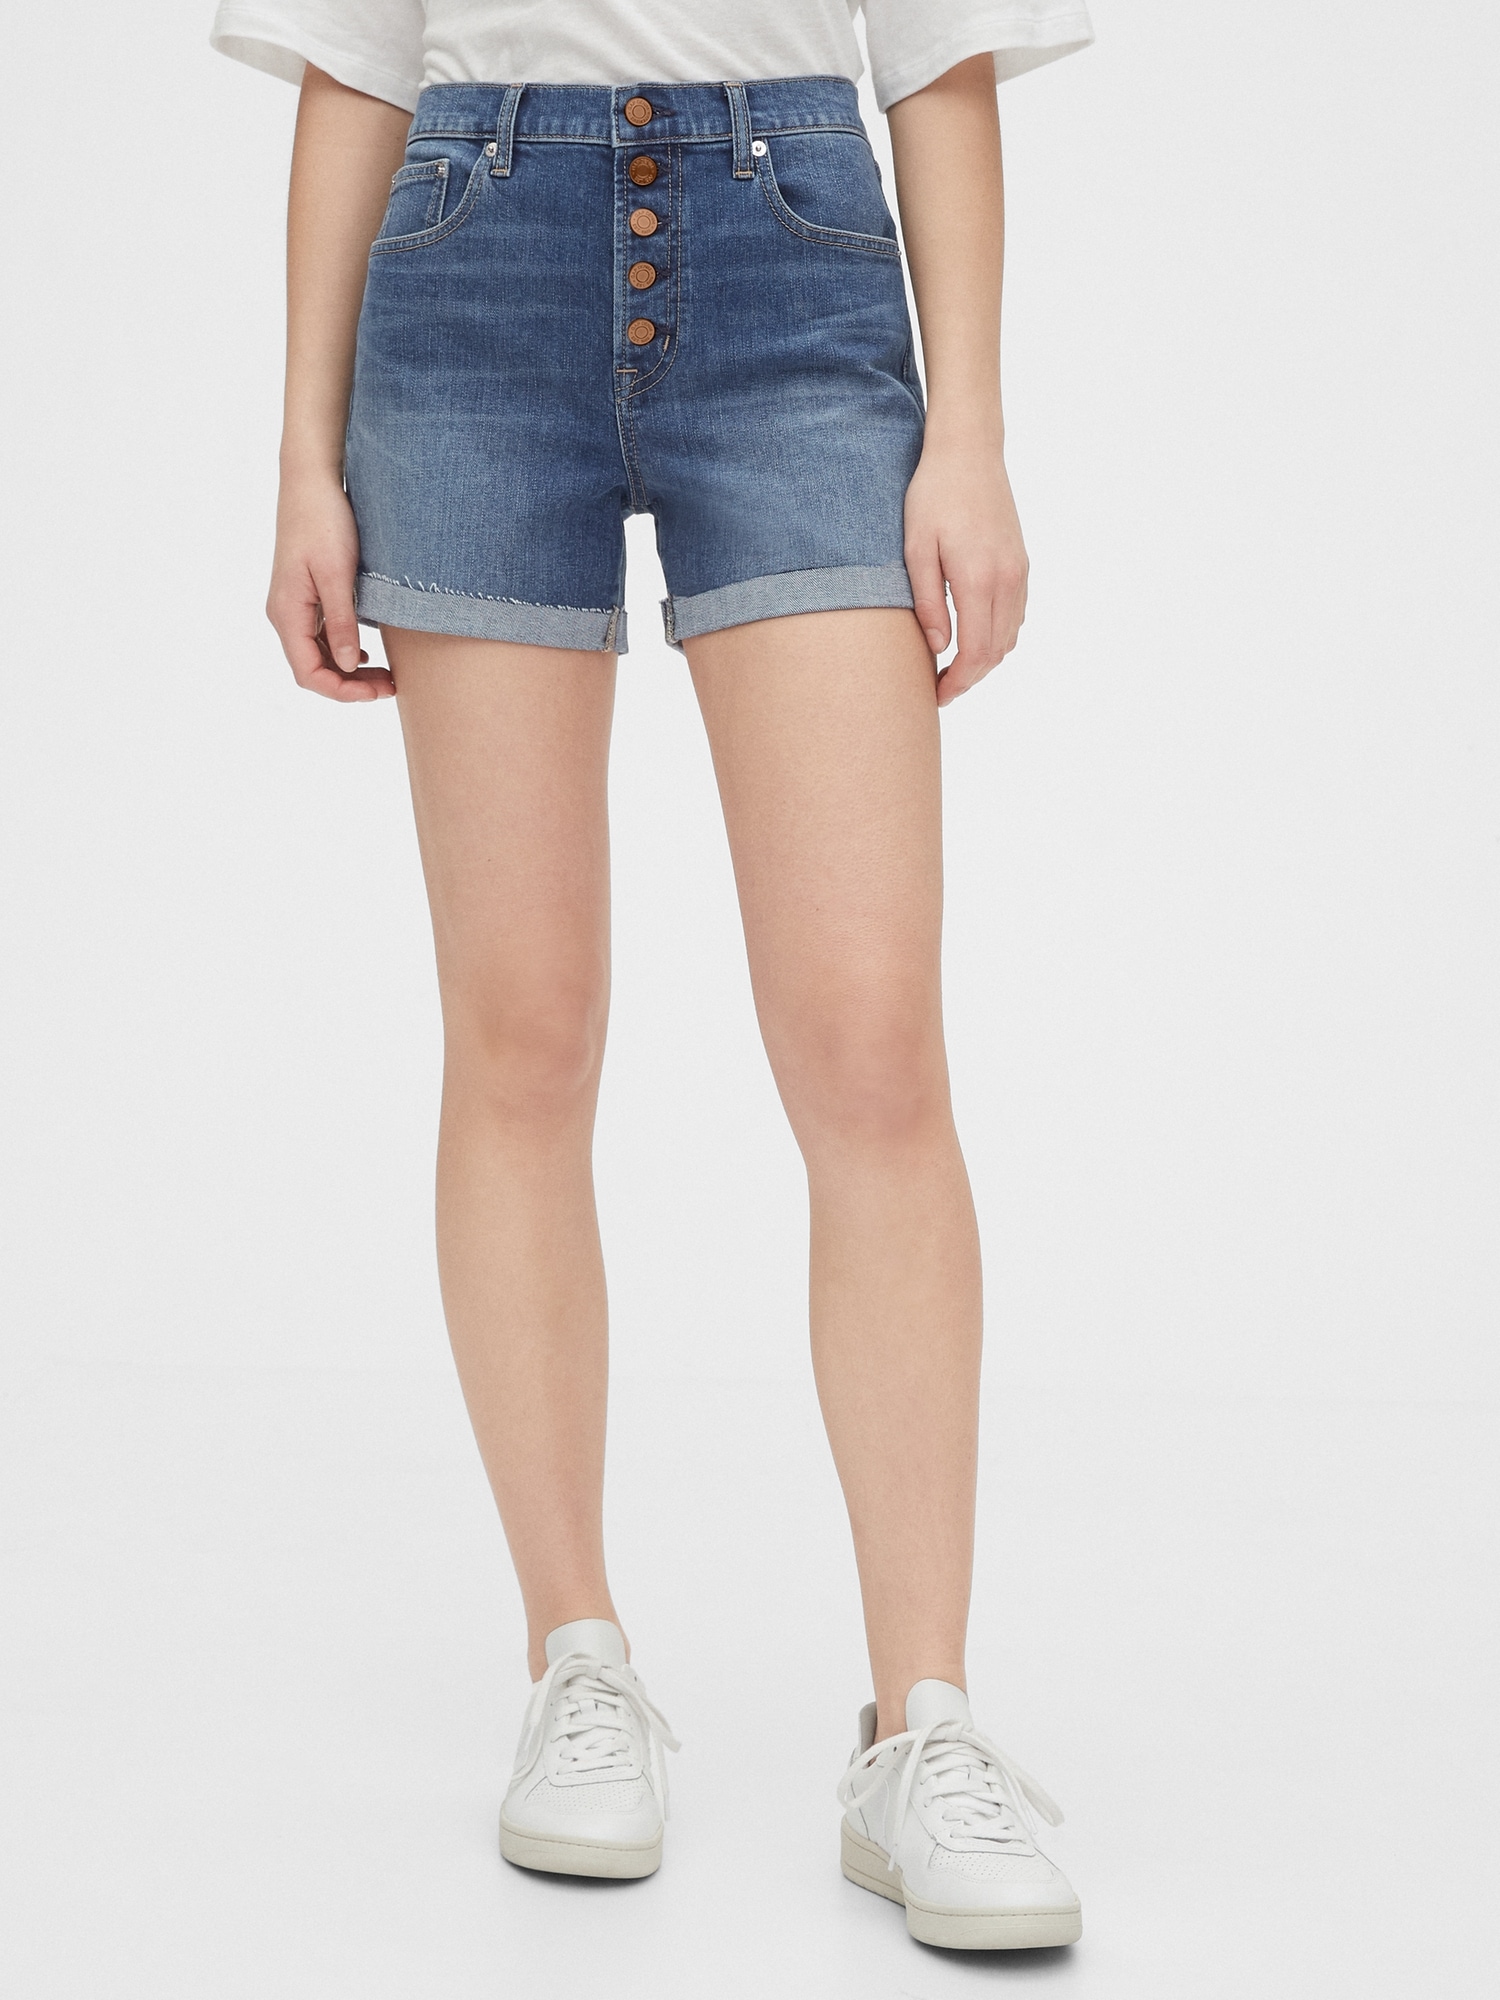 jean shorts canada